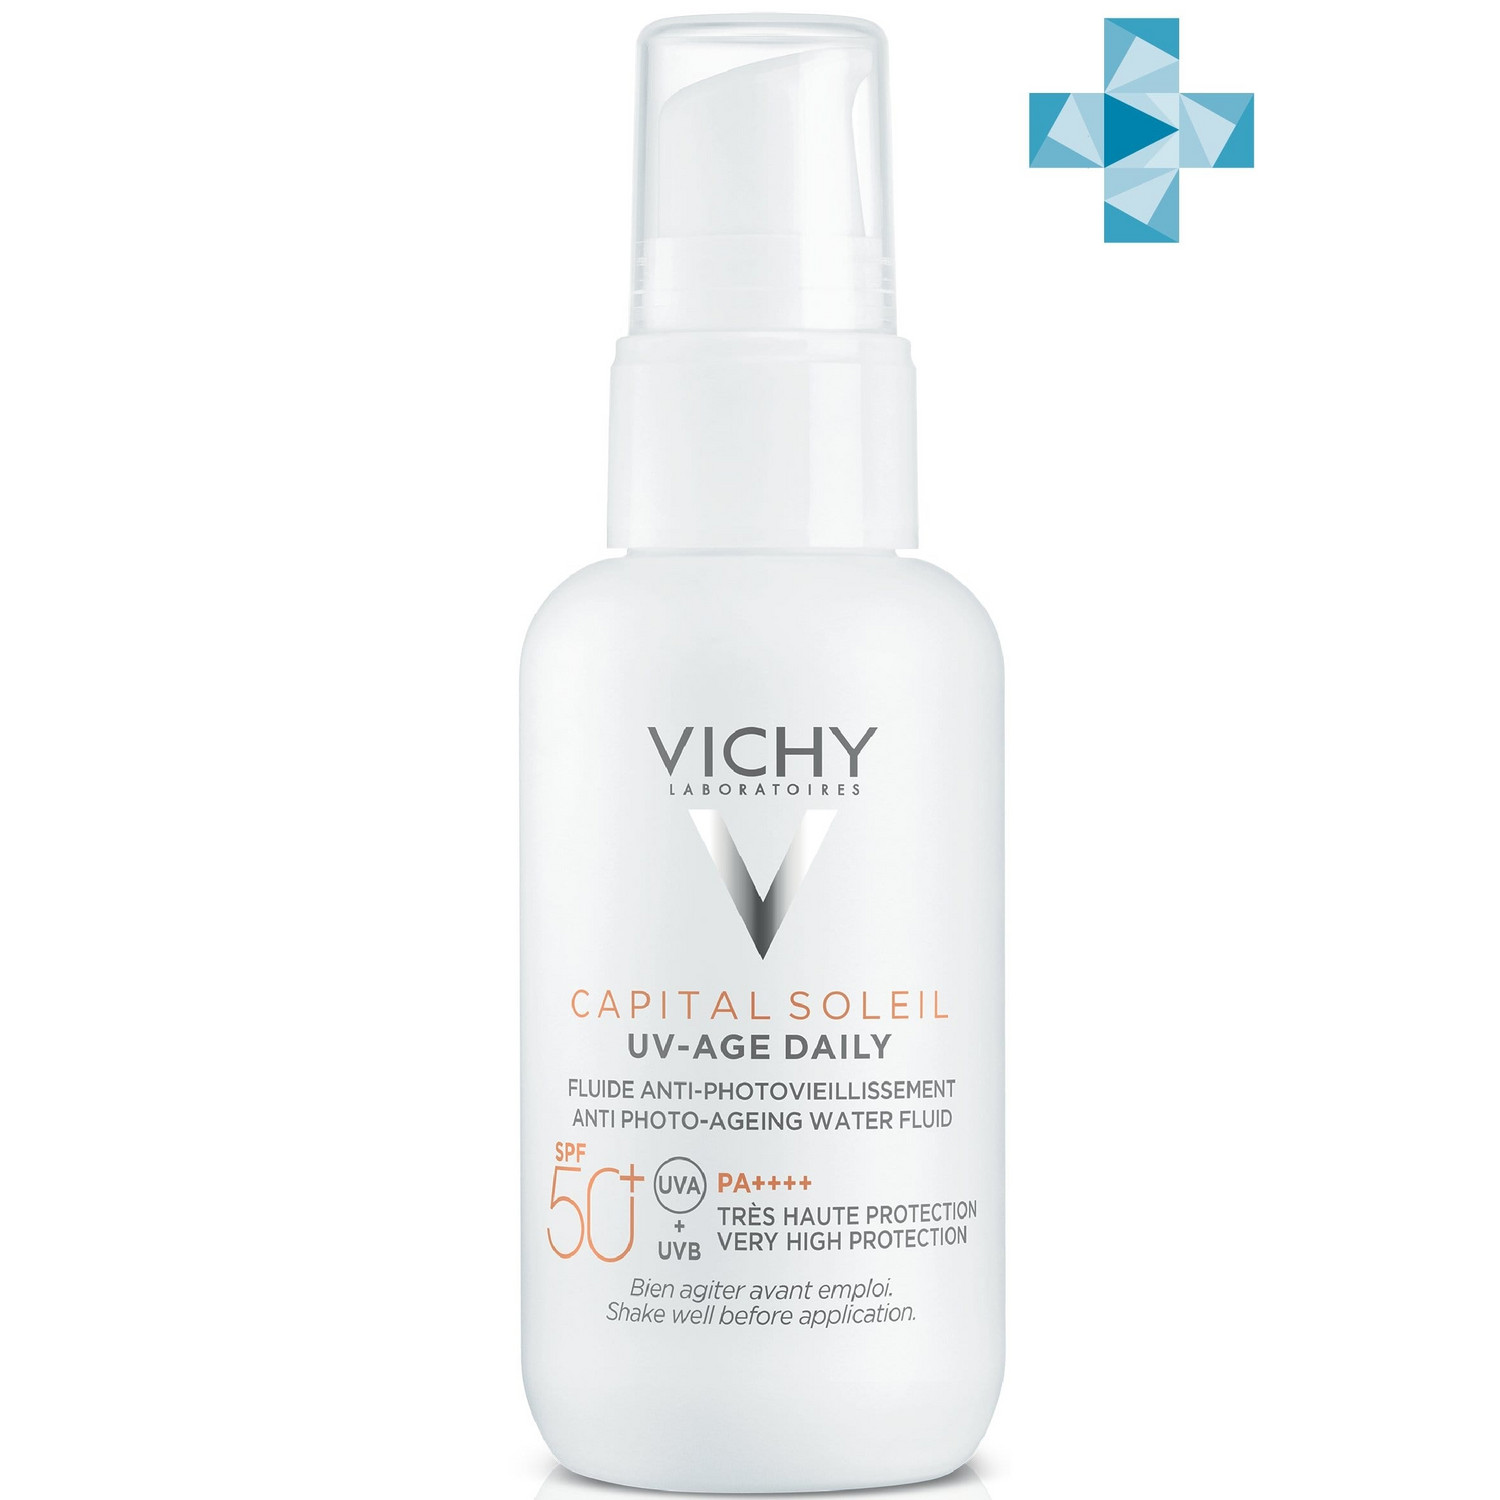 Vichy Невесомый солнцезащитный флюид для лица против признаков фотостарения UV-Age Daily SPF 50+, 40 мл (Vichy, Capital Soleil)